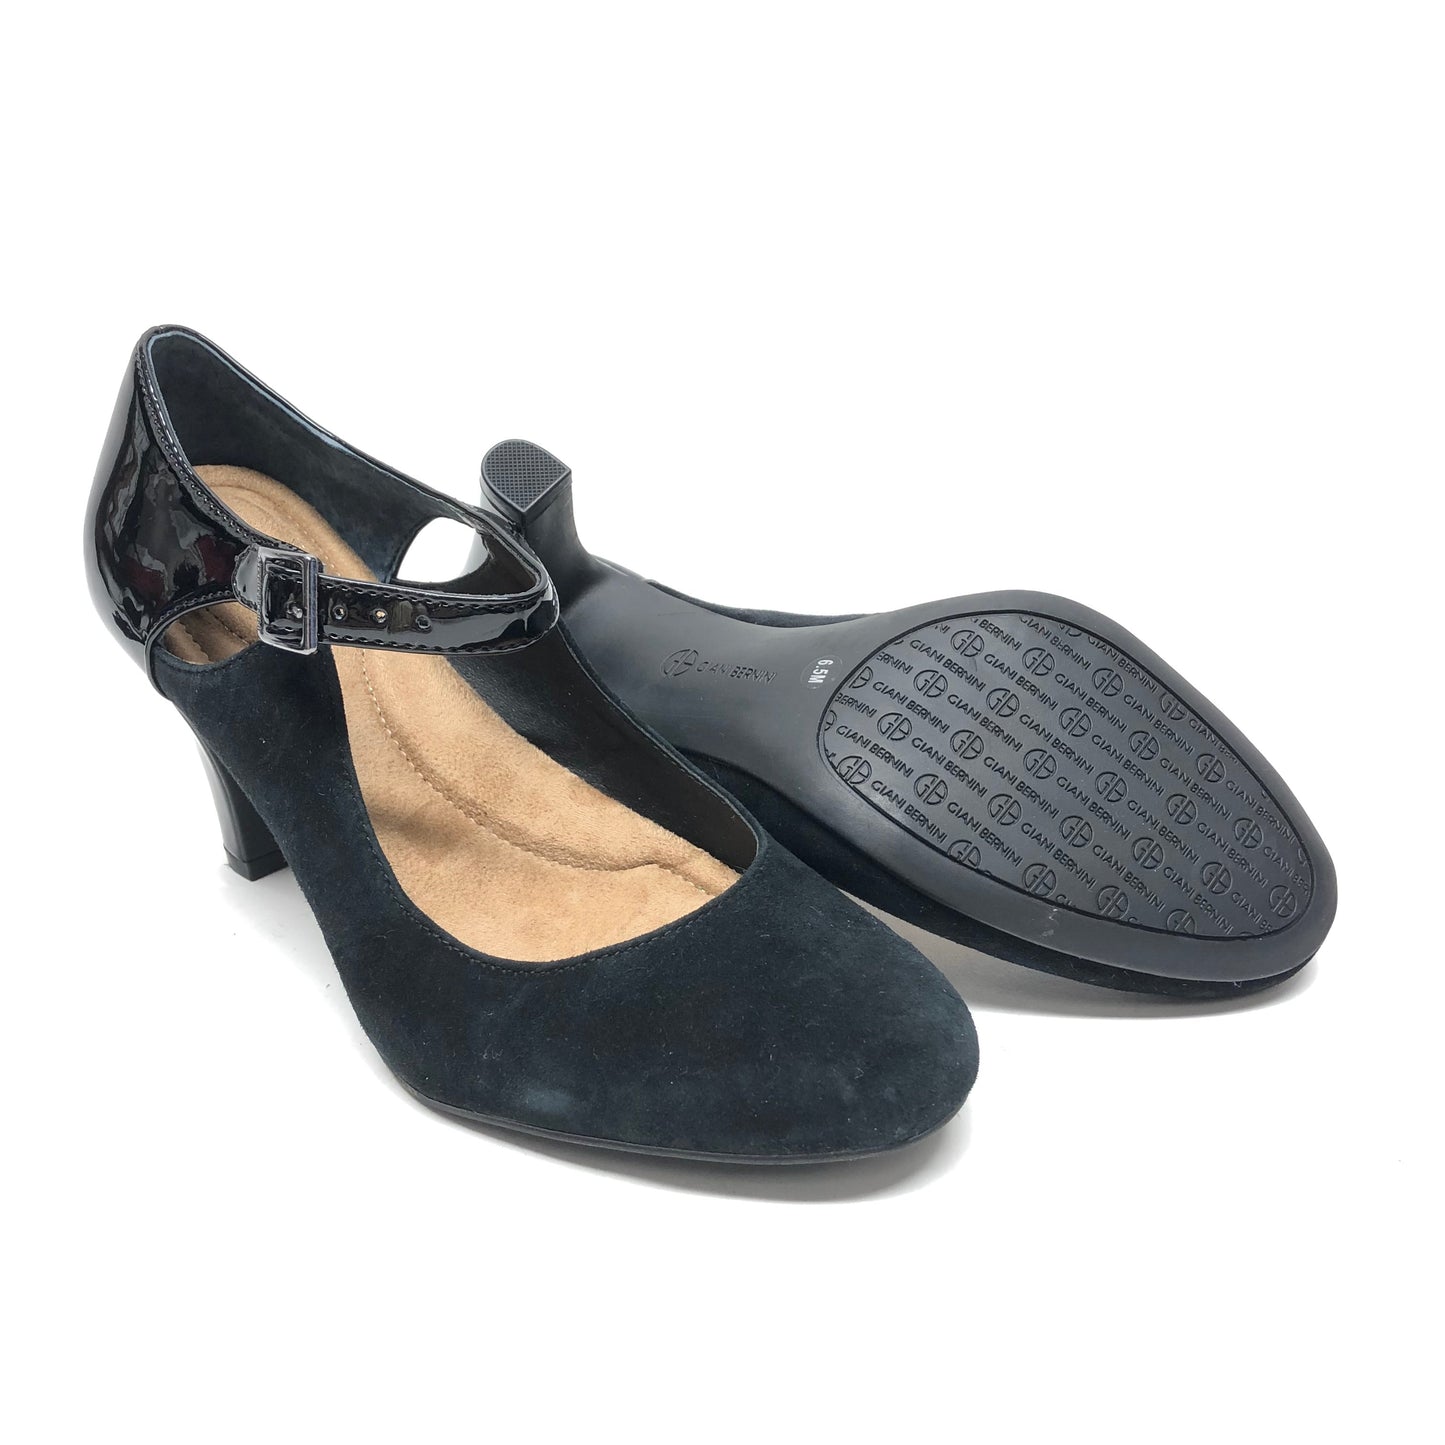 Shoes Heels Block By Giani Bernini  Size: 6.5